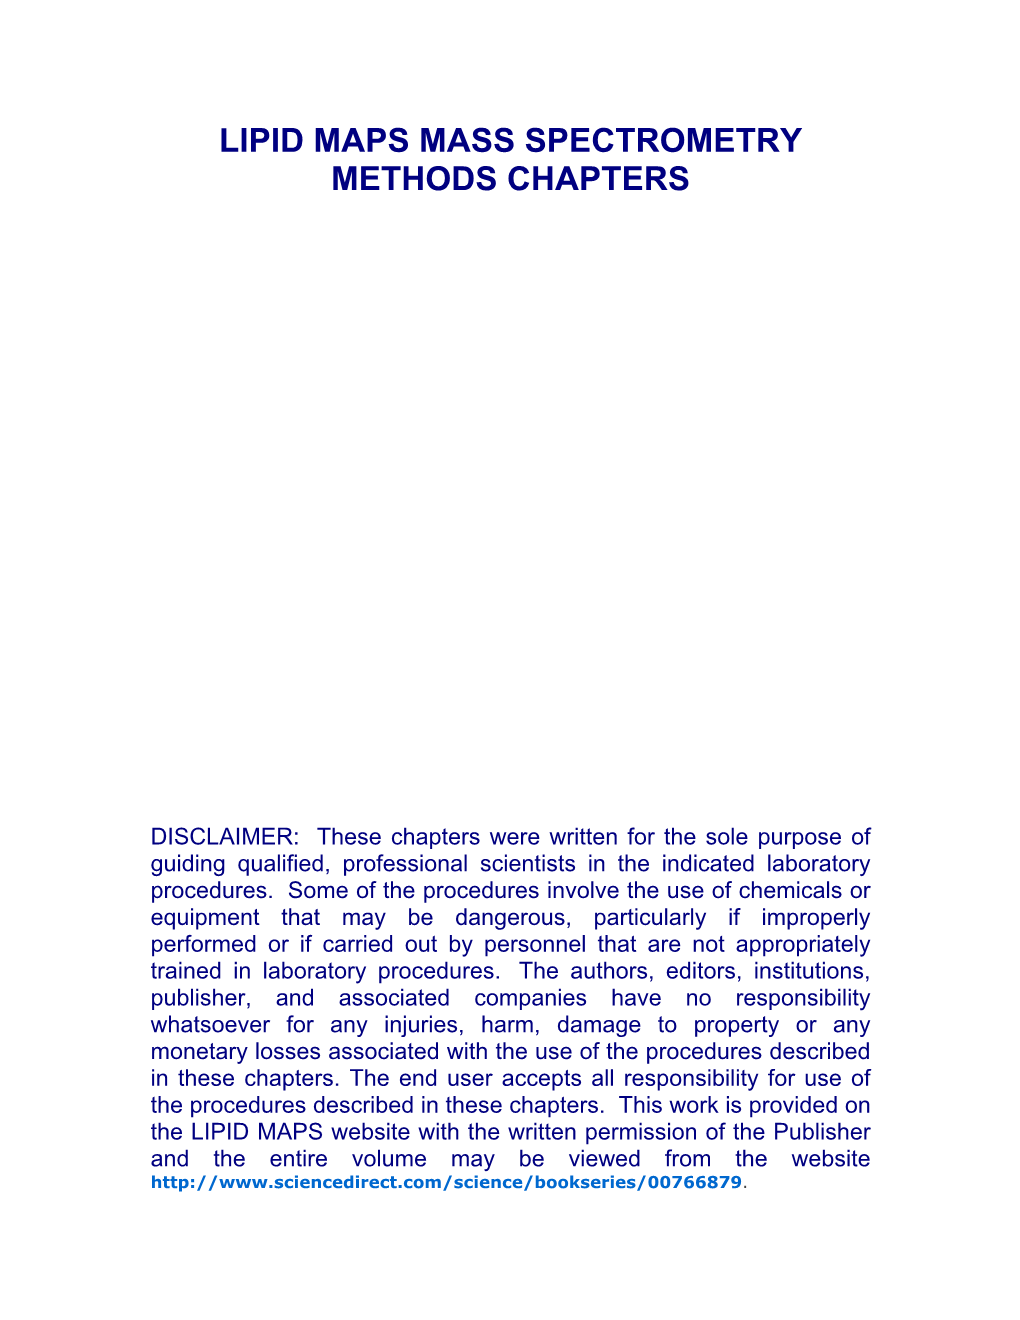 Lipid Maps Mass Spectrometry Methods Chapters